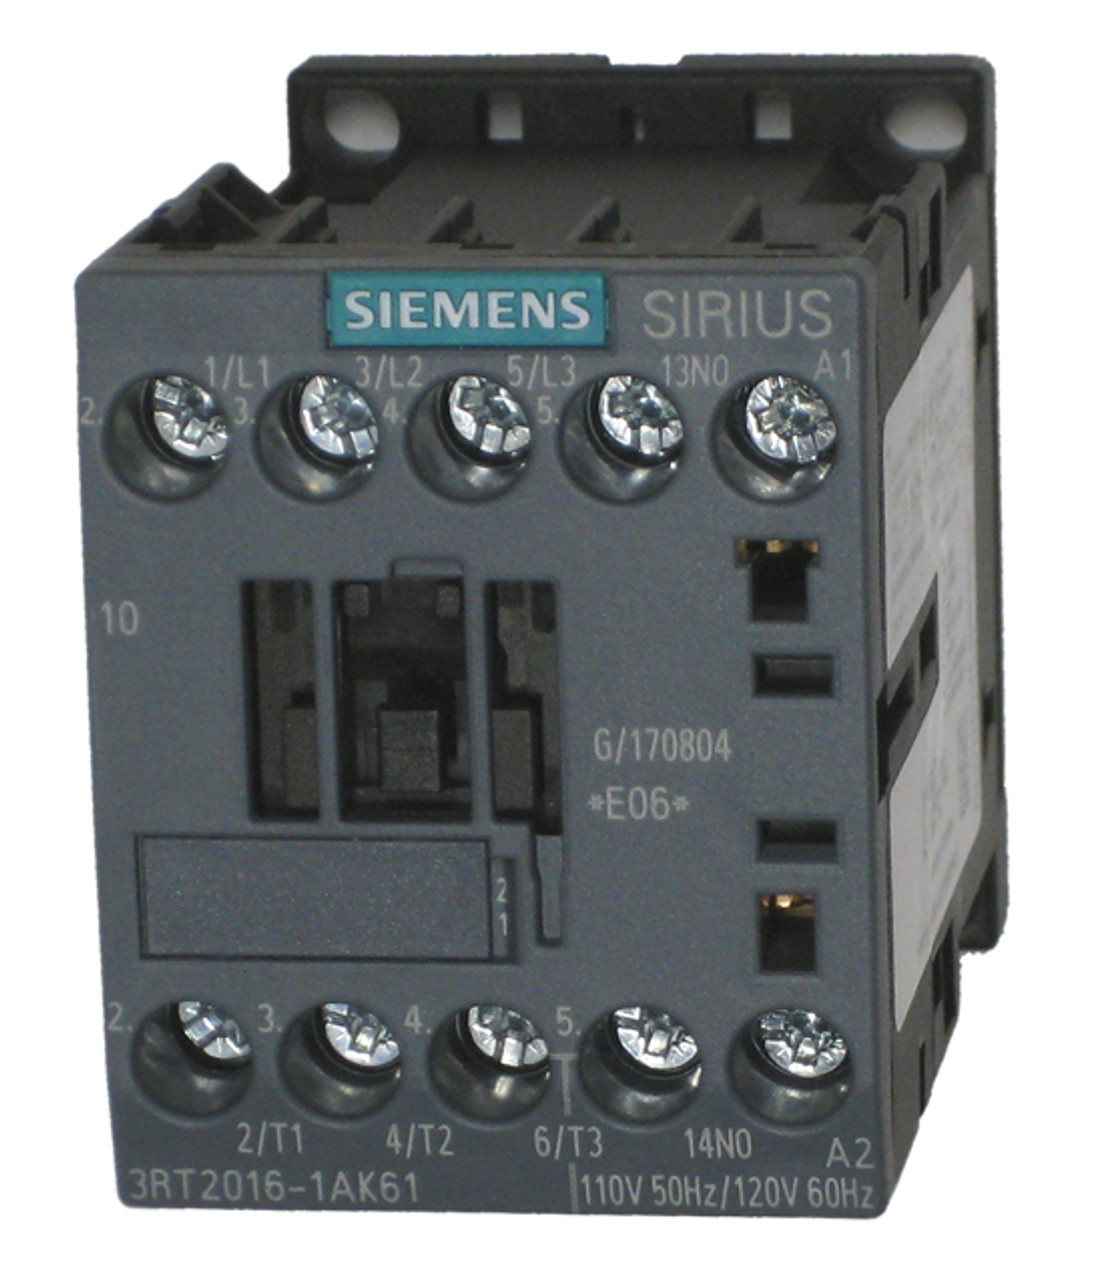 Siemens 3RT2016-1AK61 electrical contactor